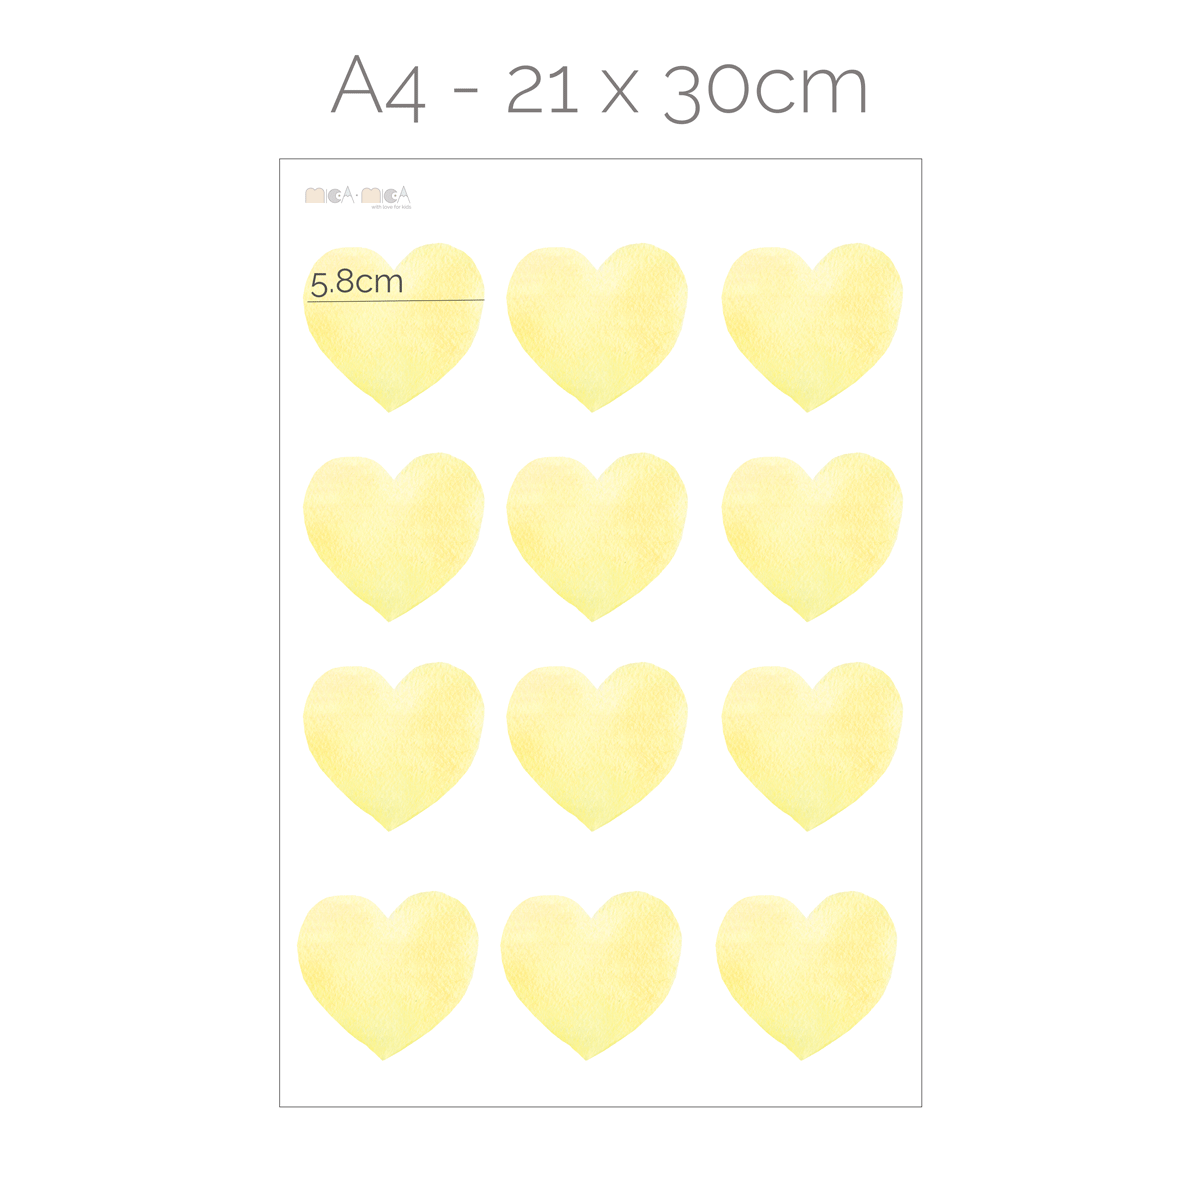 Hearts wall stickers - Yellow watercolour hearts